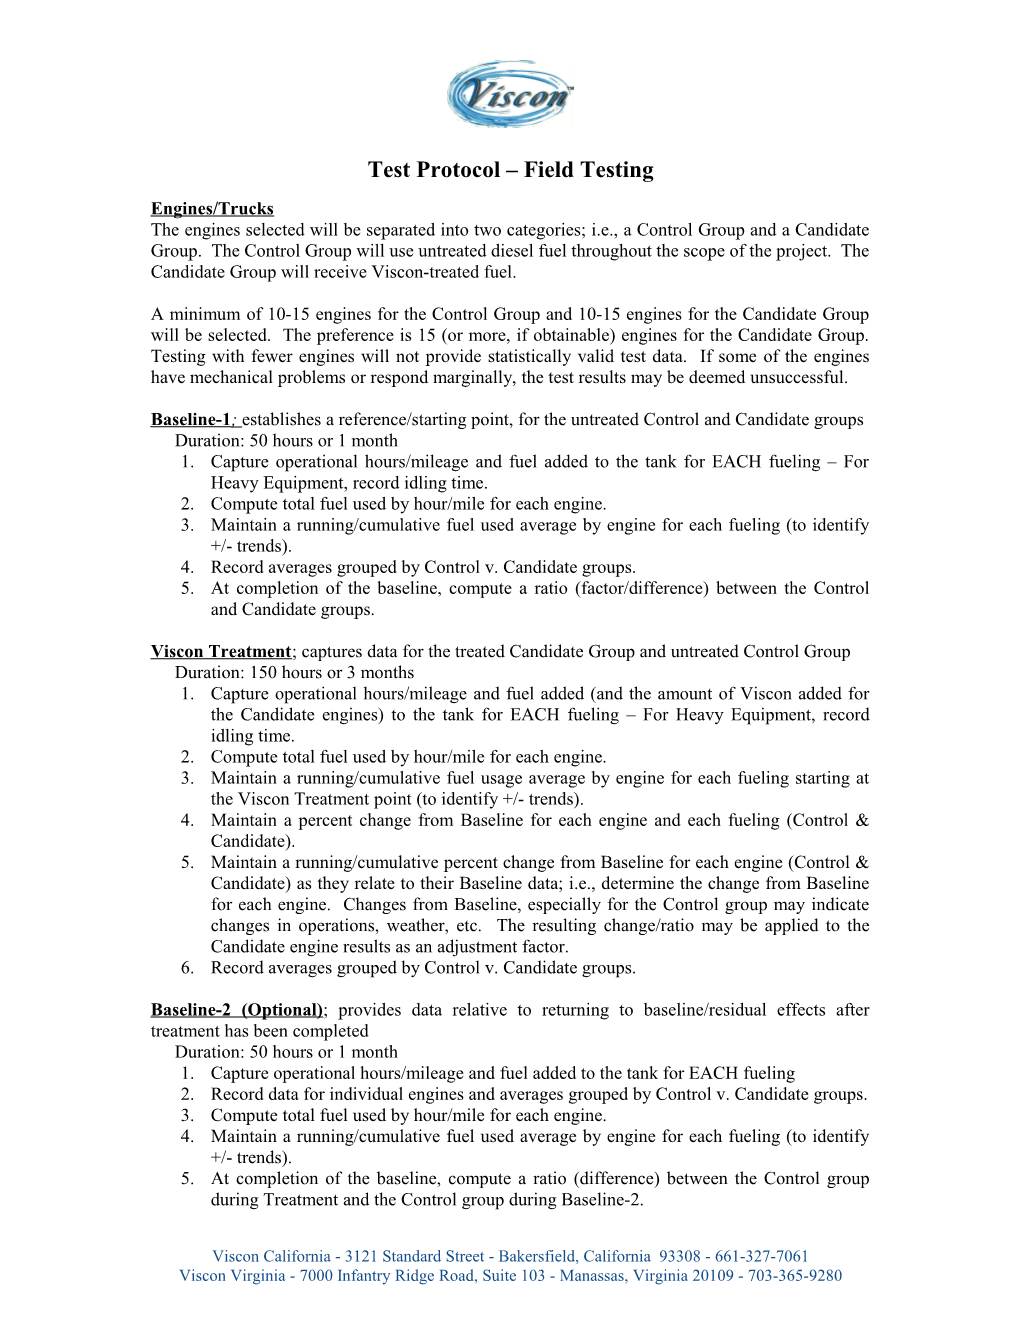 Test Protocol Field Testing